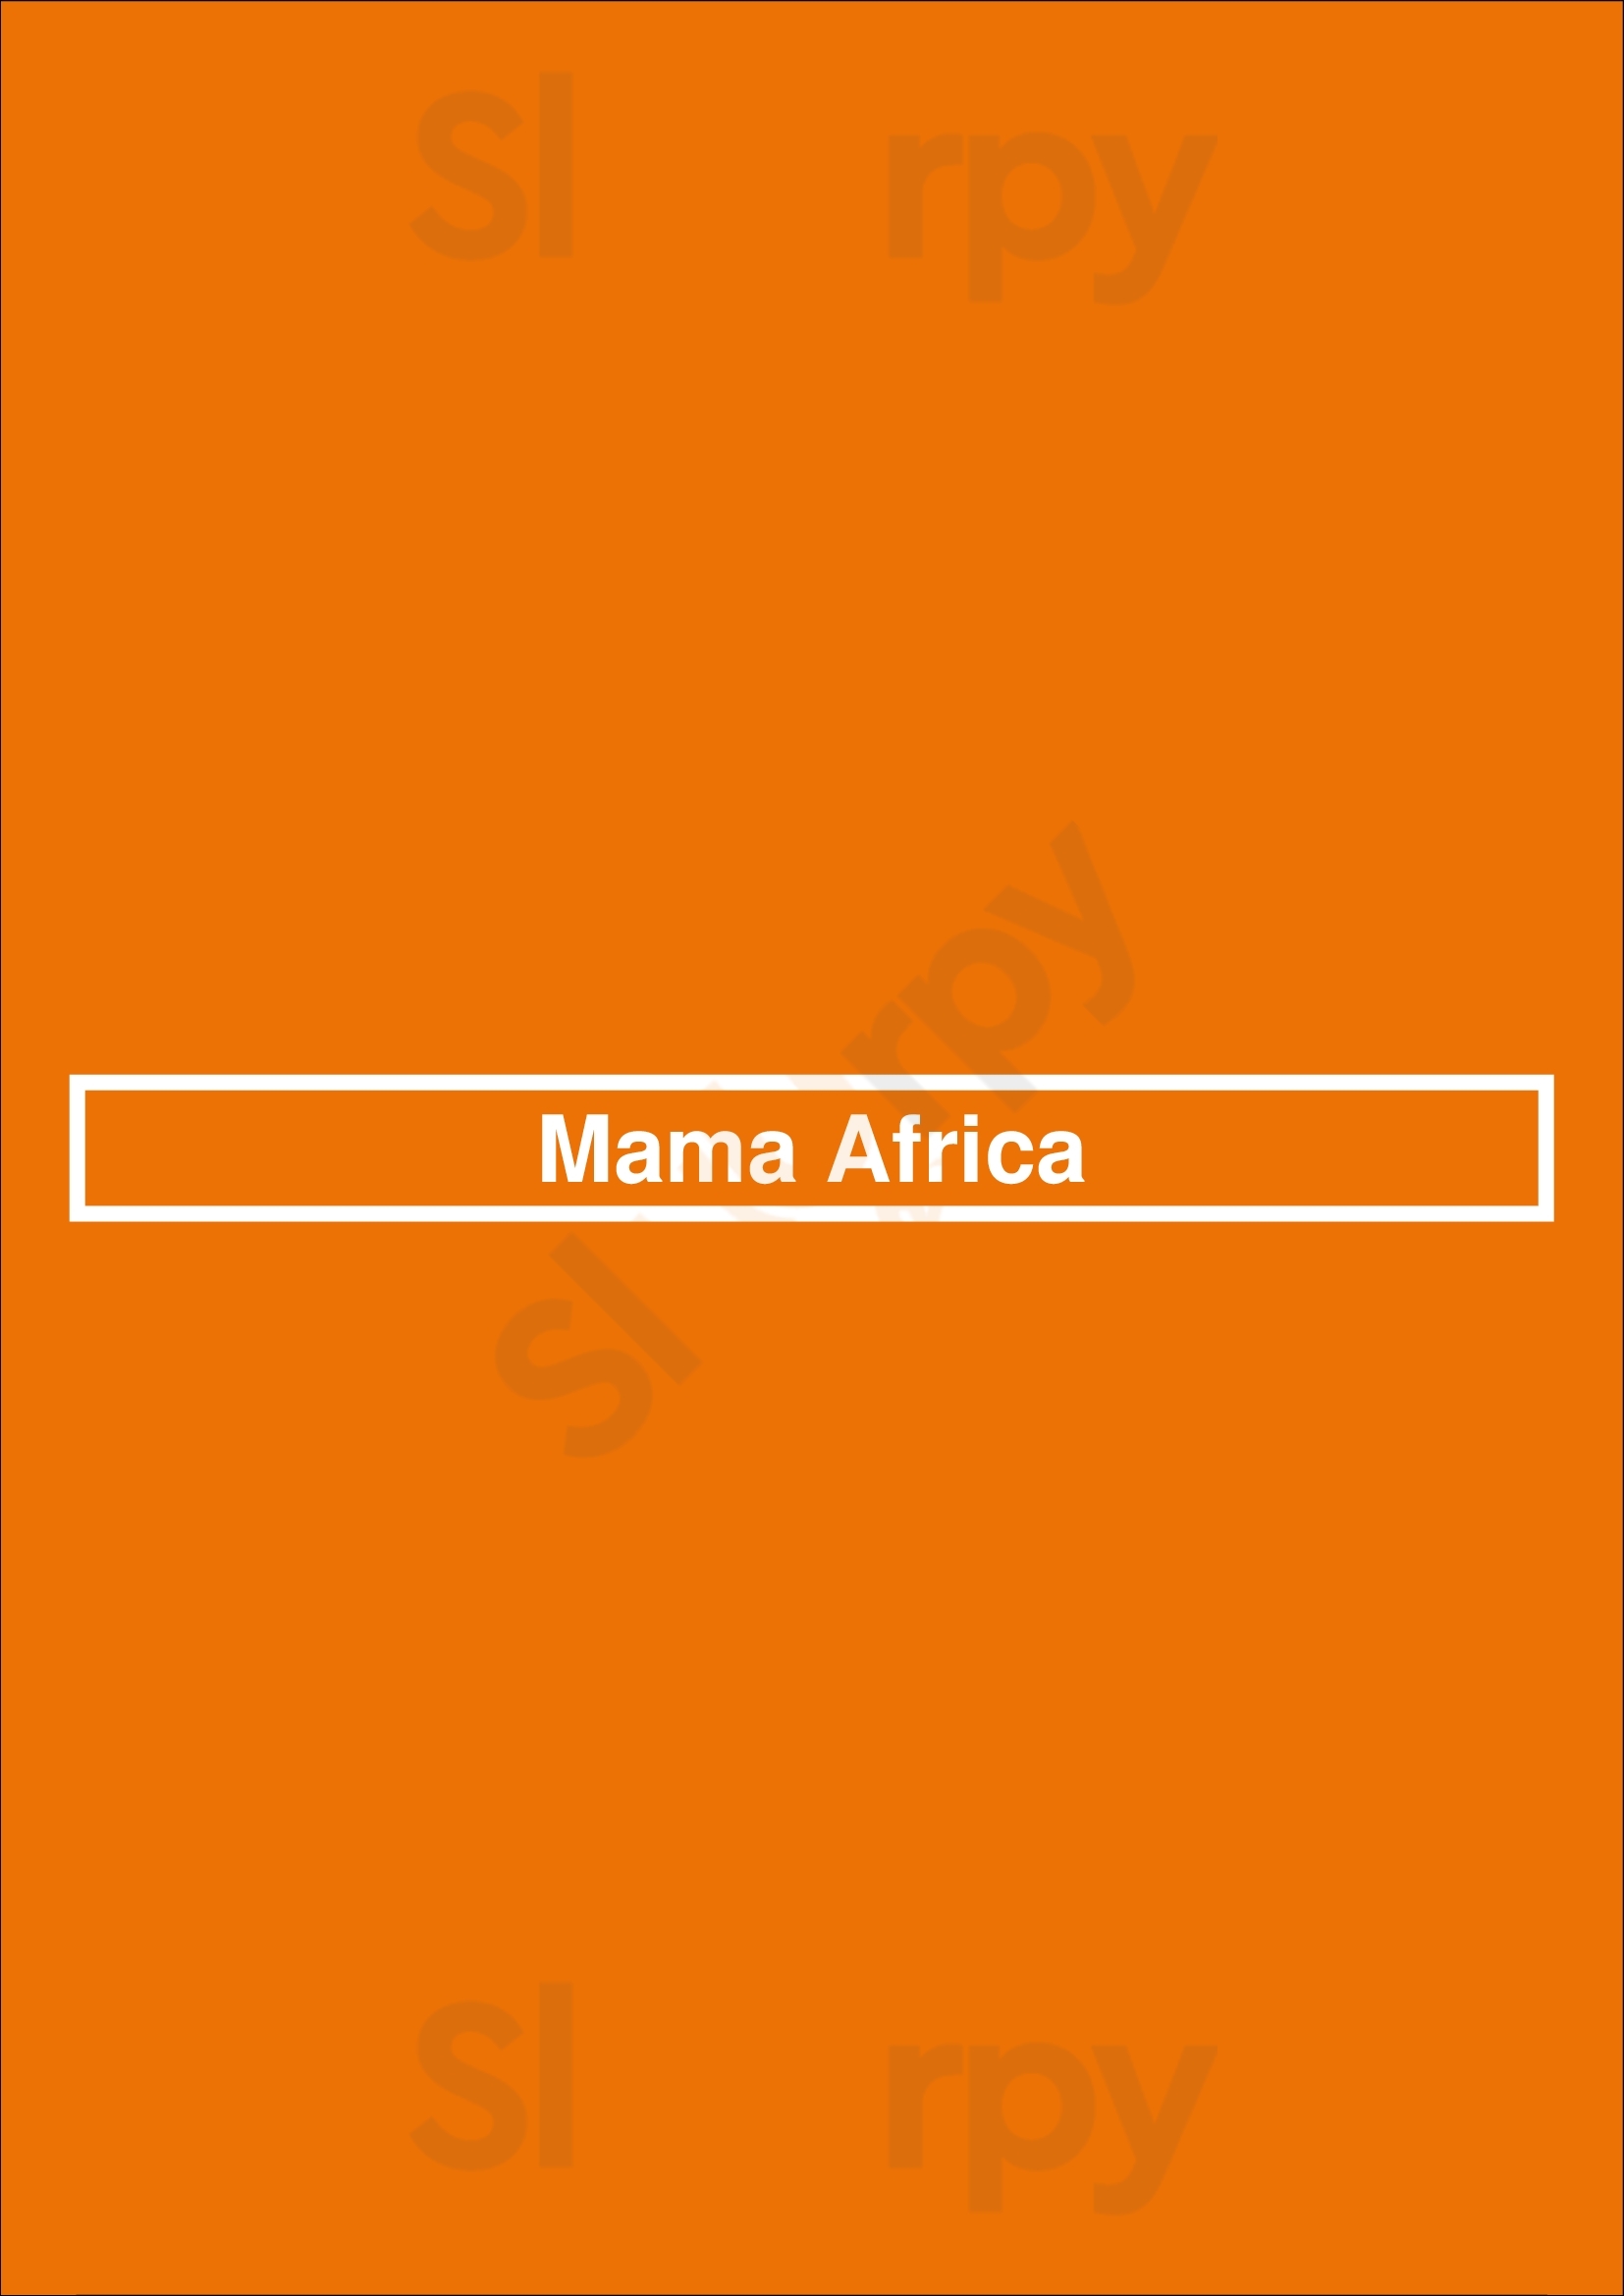 Mama Africa Paris Menu - 1